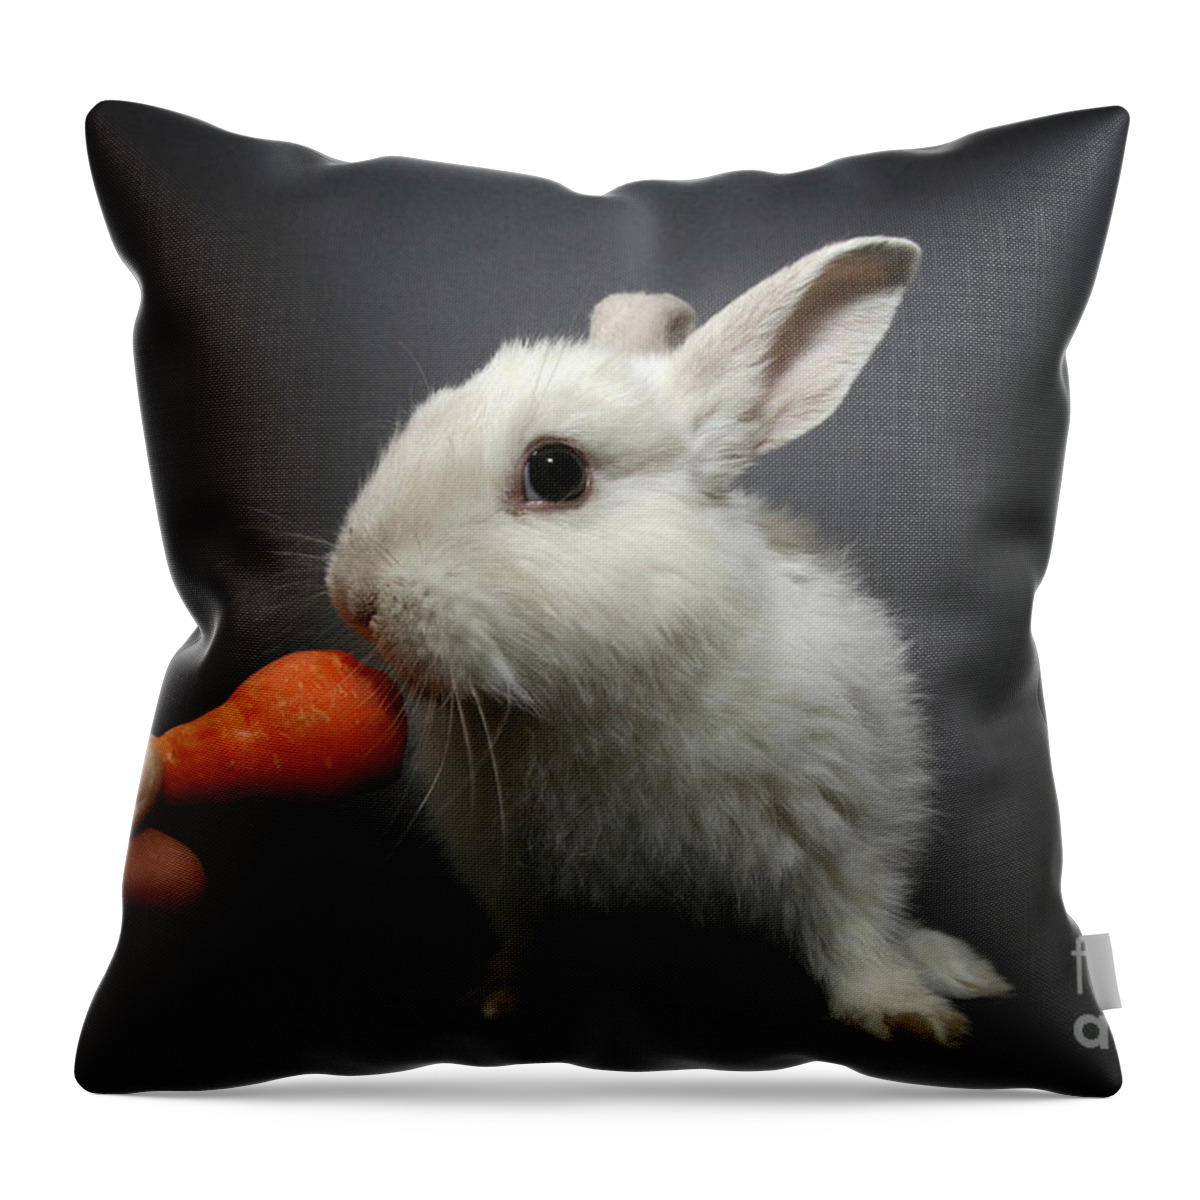 White Throw Pillow featuring the photograph White Rabbit by Yedidya yos mizrachi